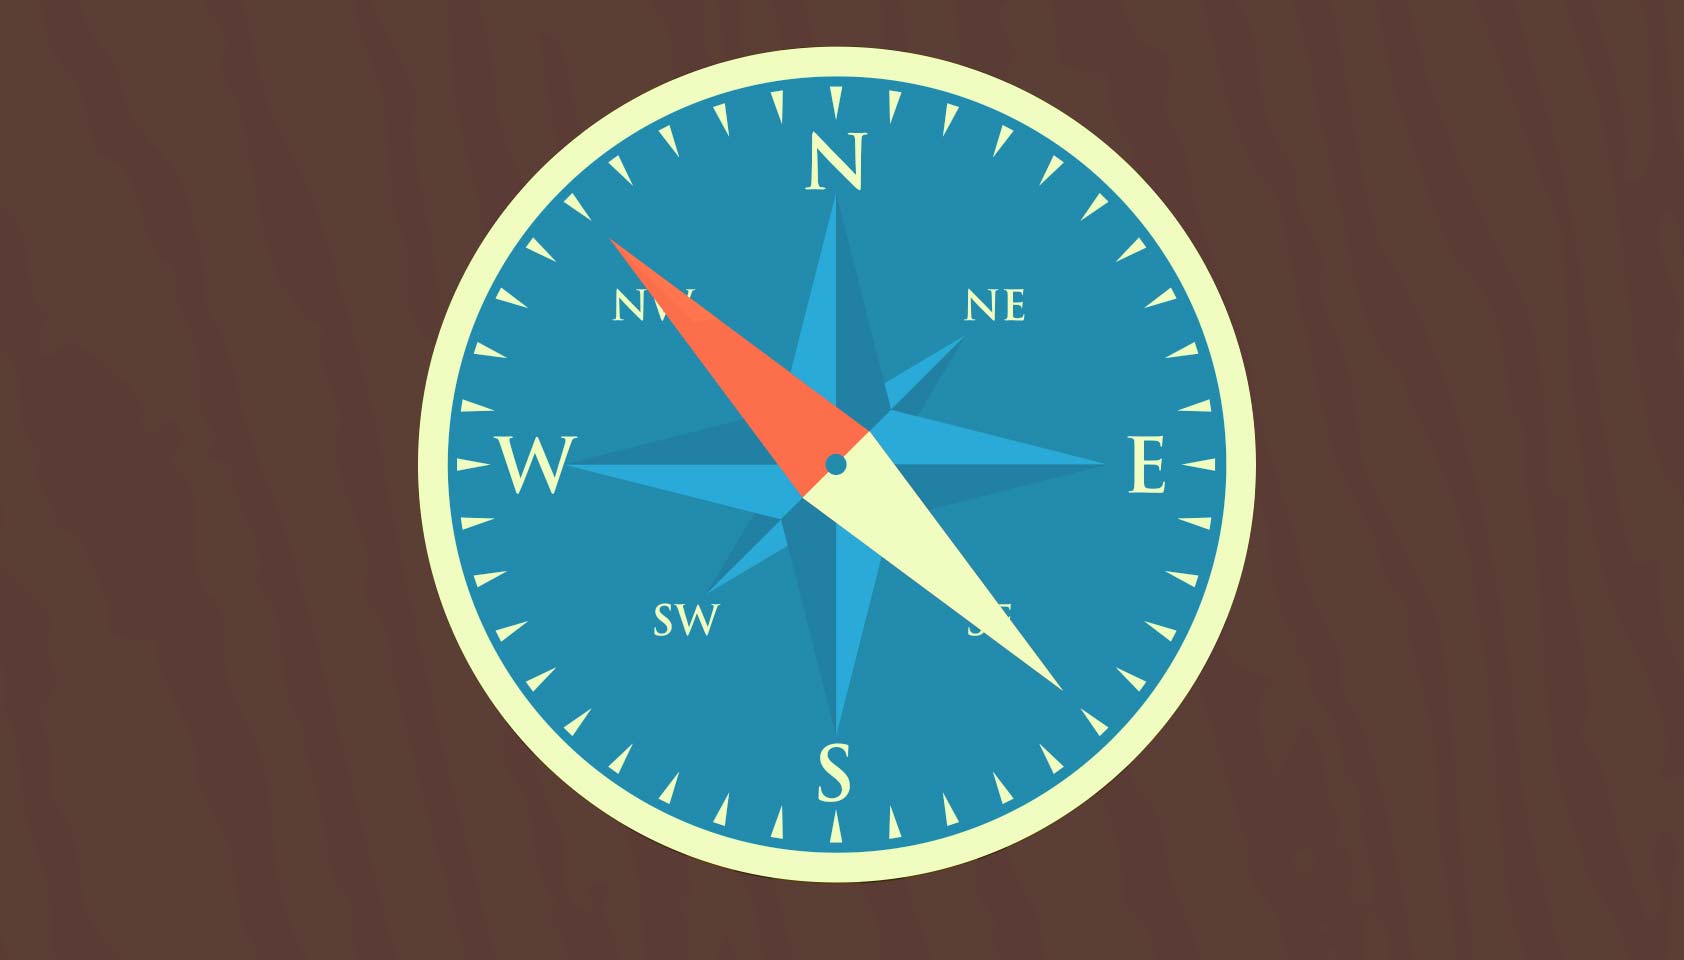 compass html